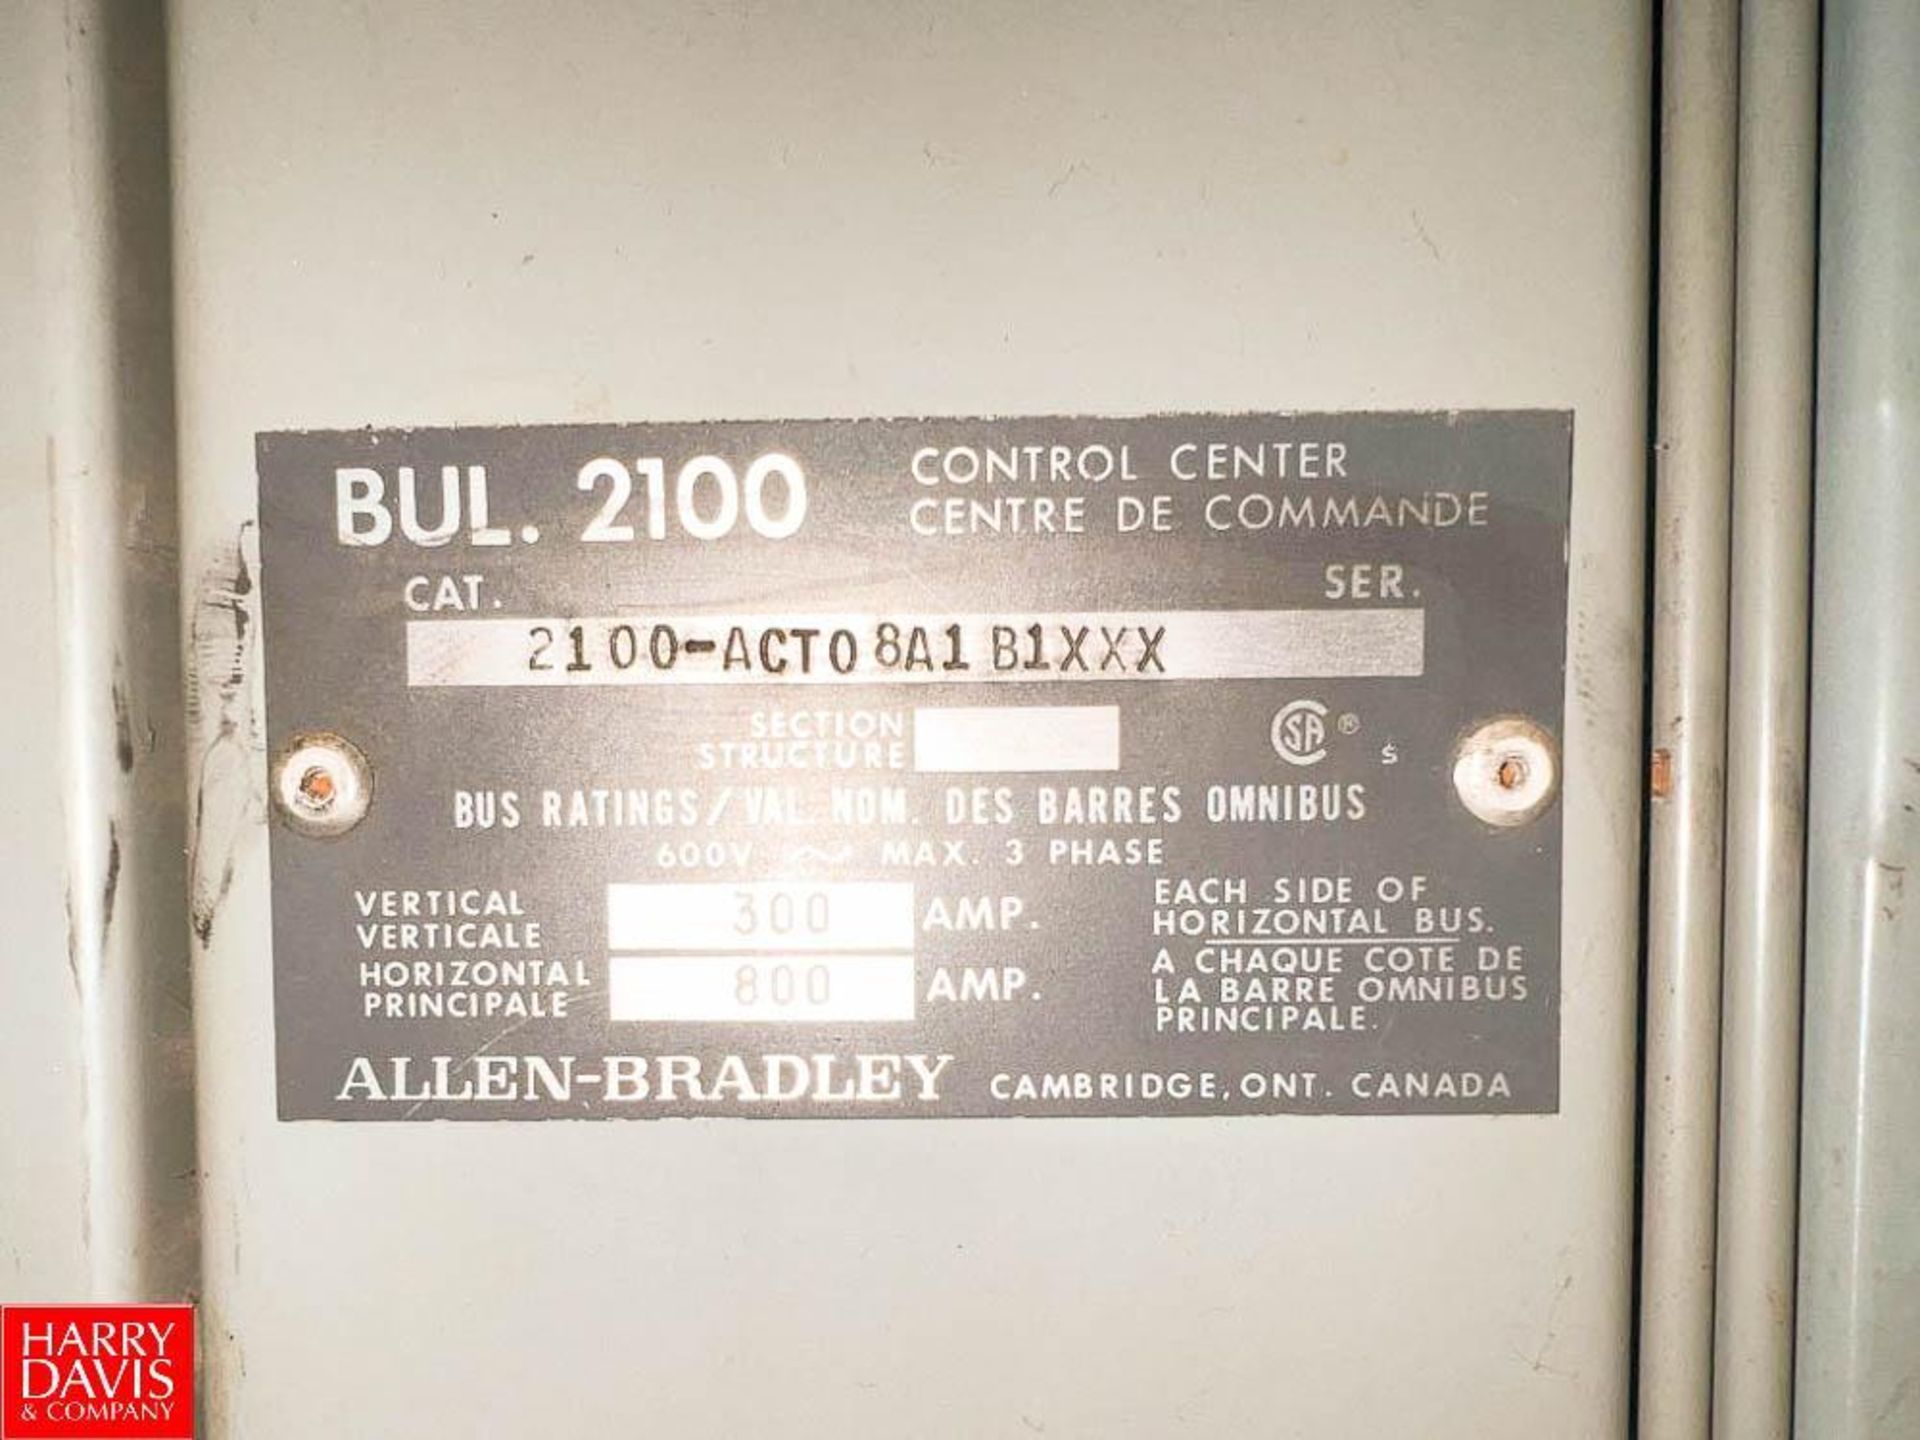 Allen-Bradley Centerline 2100 Motor Control Center, S/N: 2100-ACTO8A1 B1XXX with 800 Amp Horizontal - Image 2 of 2